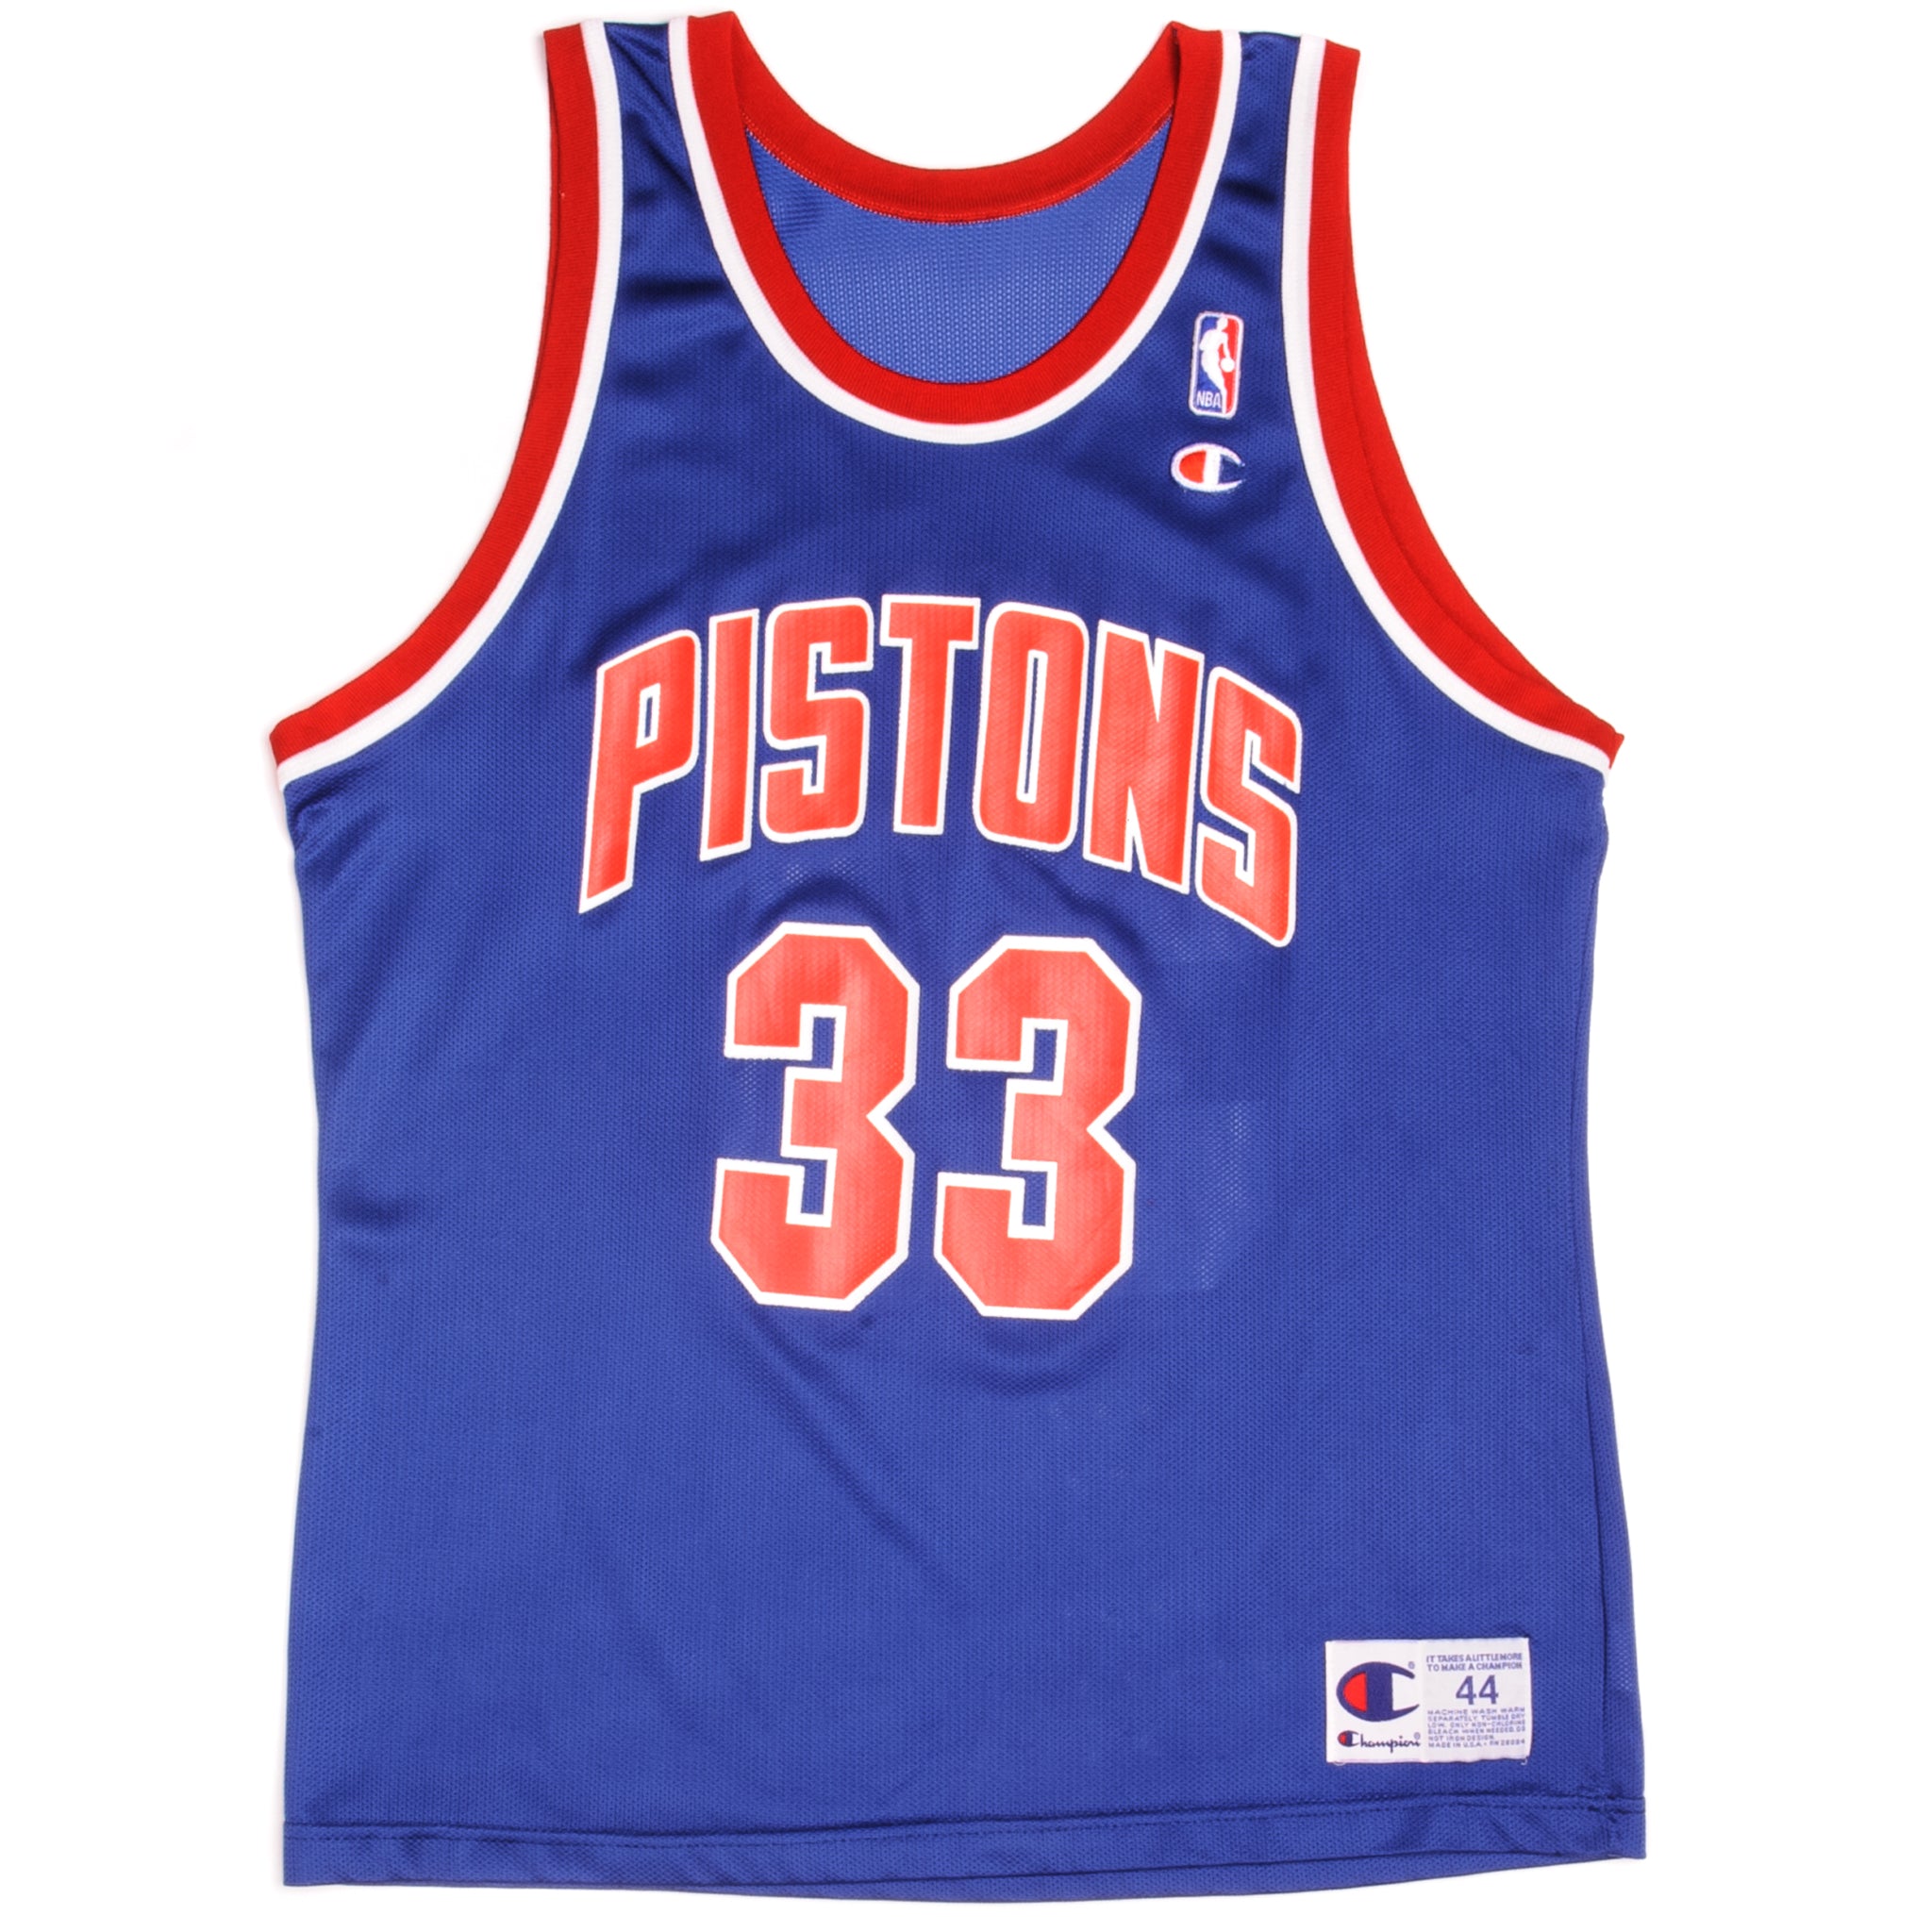 Pistons 33 